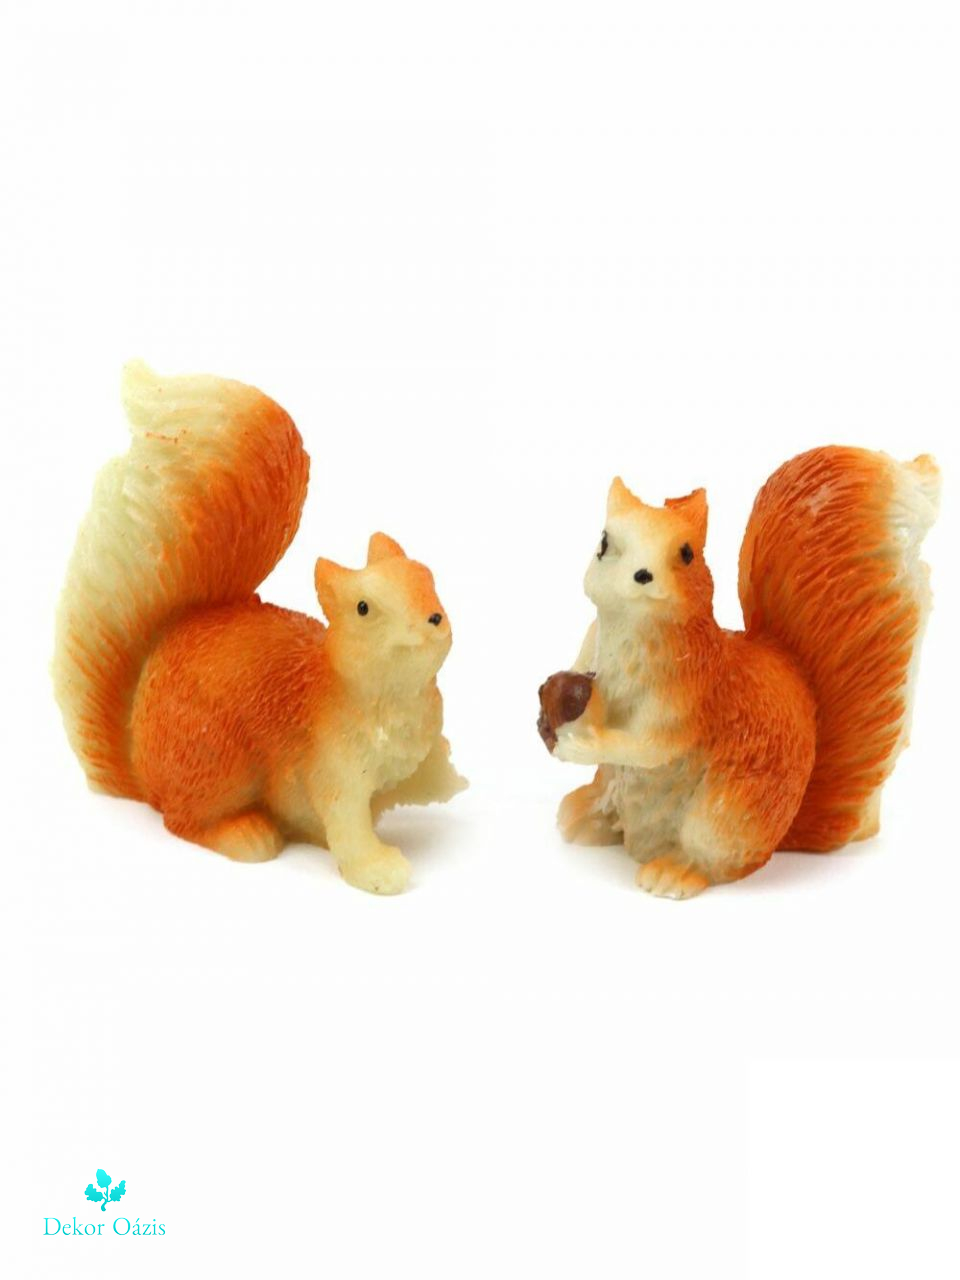 Kicsi vörös mókus figura - 2 féle